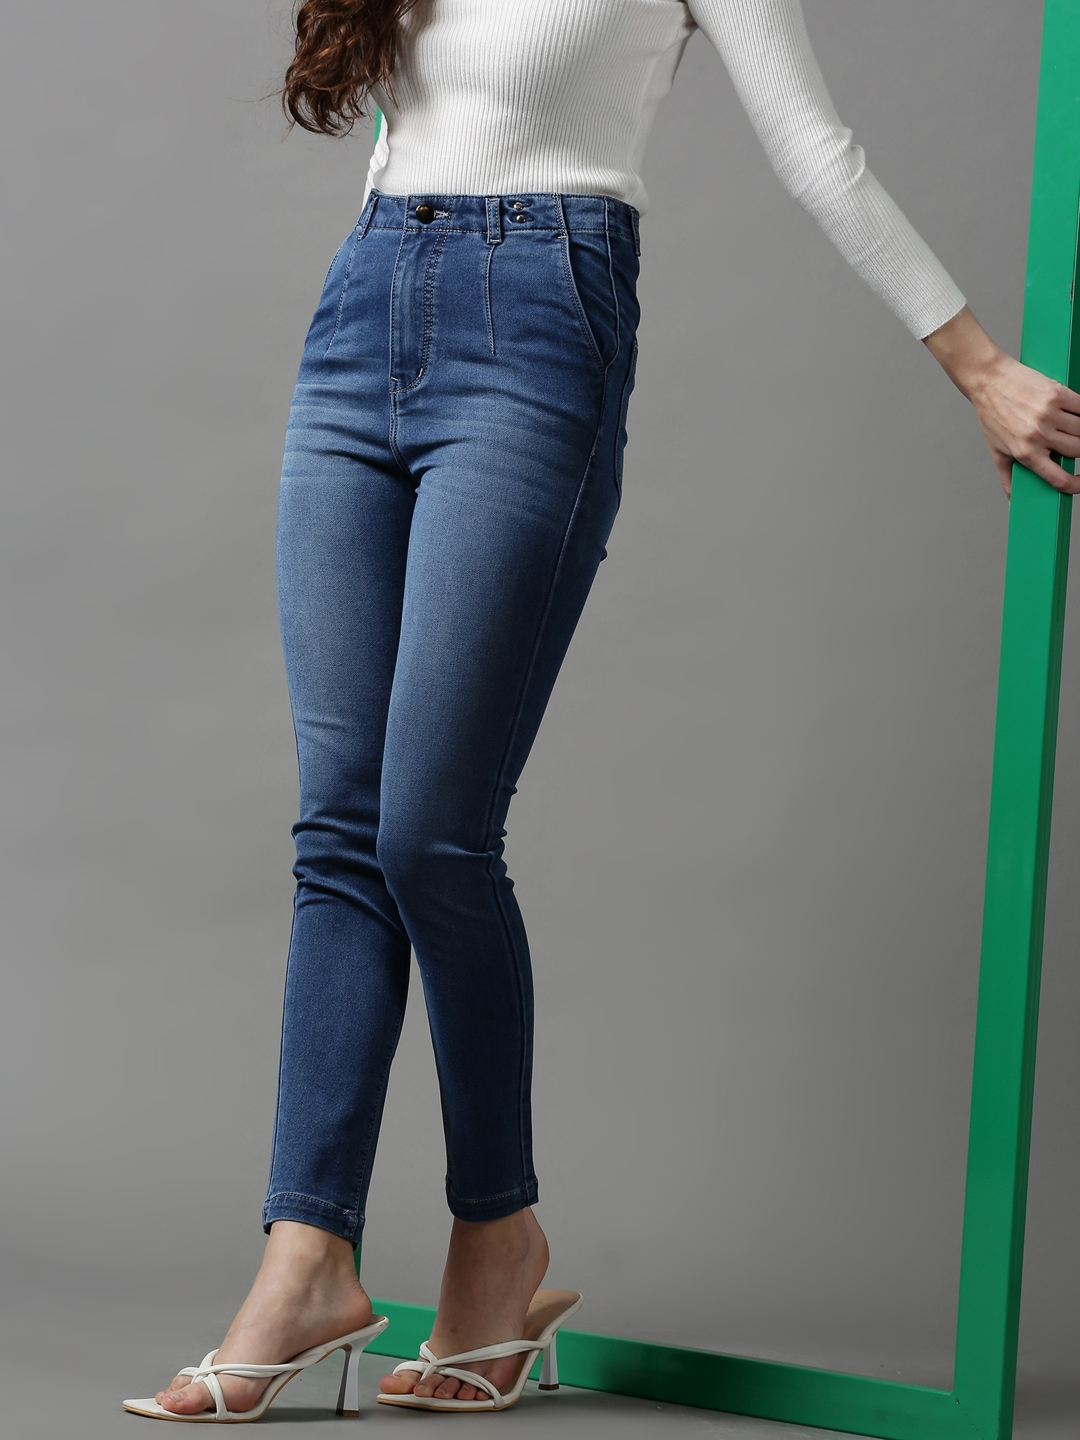 SHOWOFF Women's Clean Look Skinny Fit Blue Denim Jeans